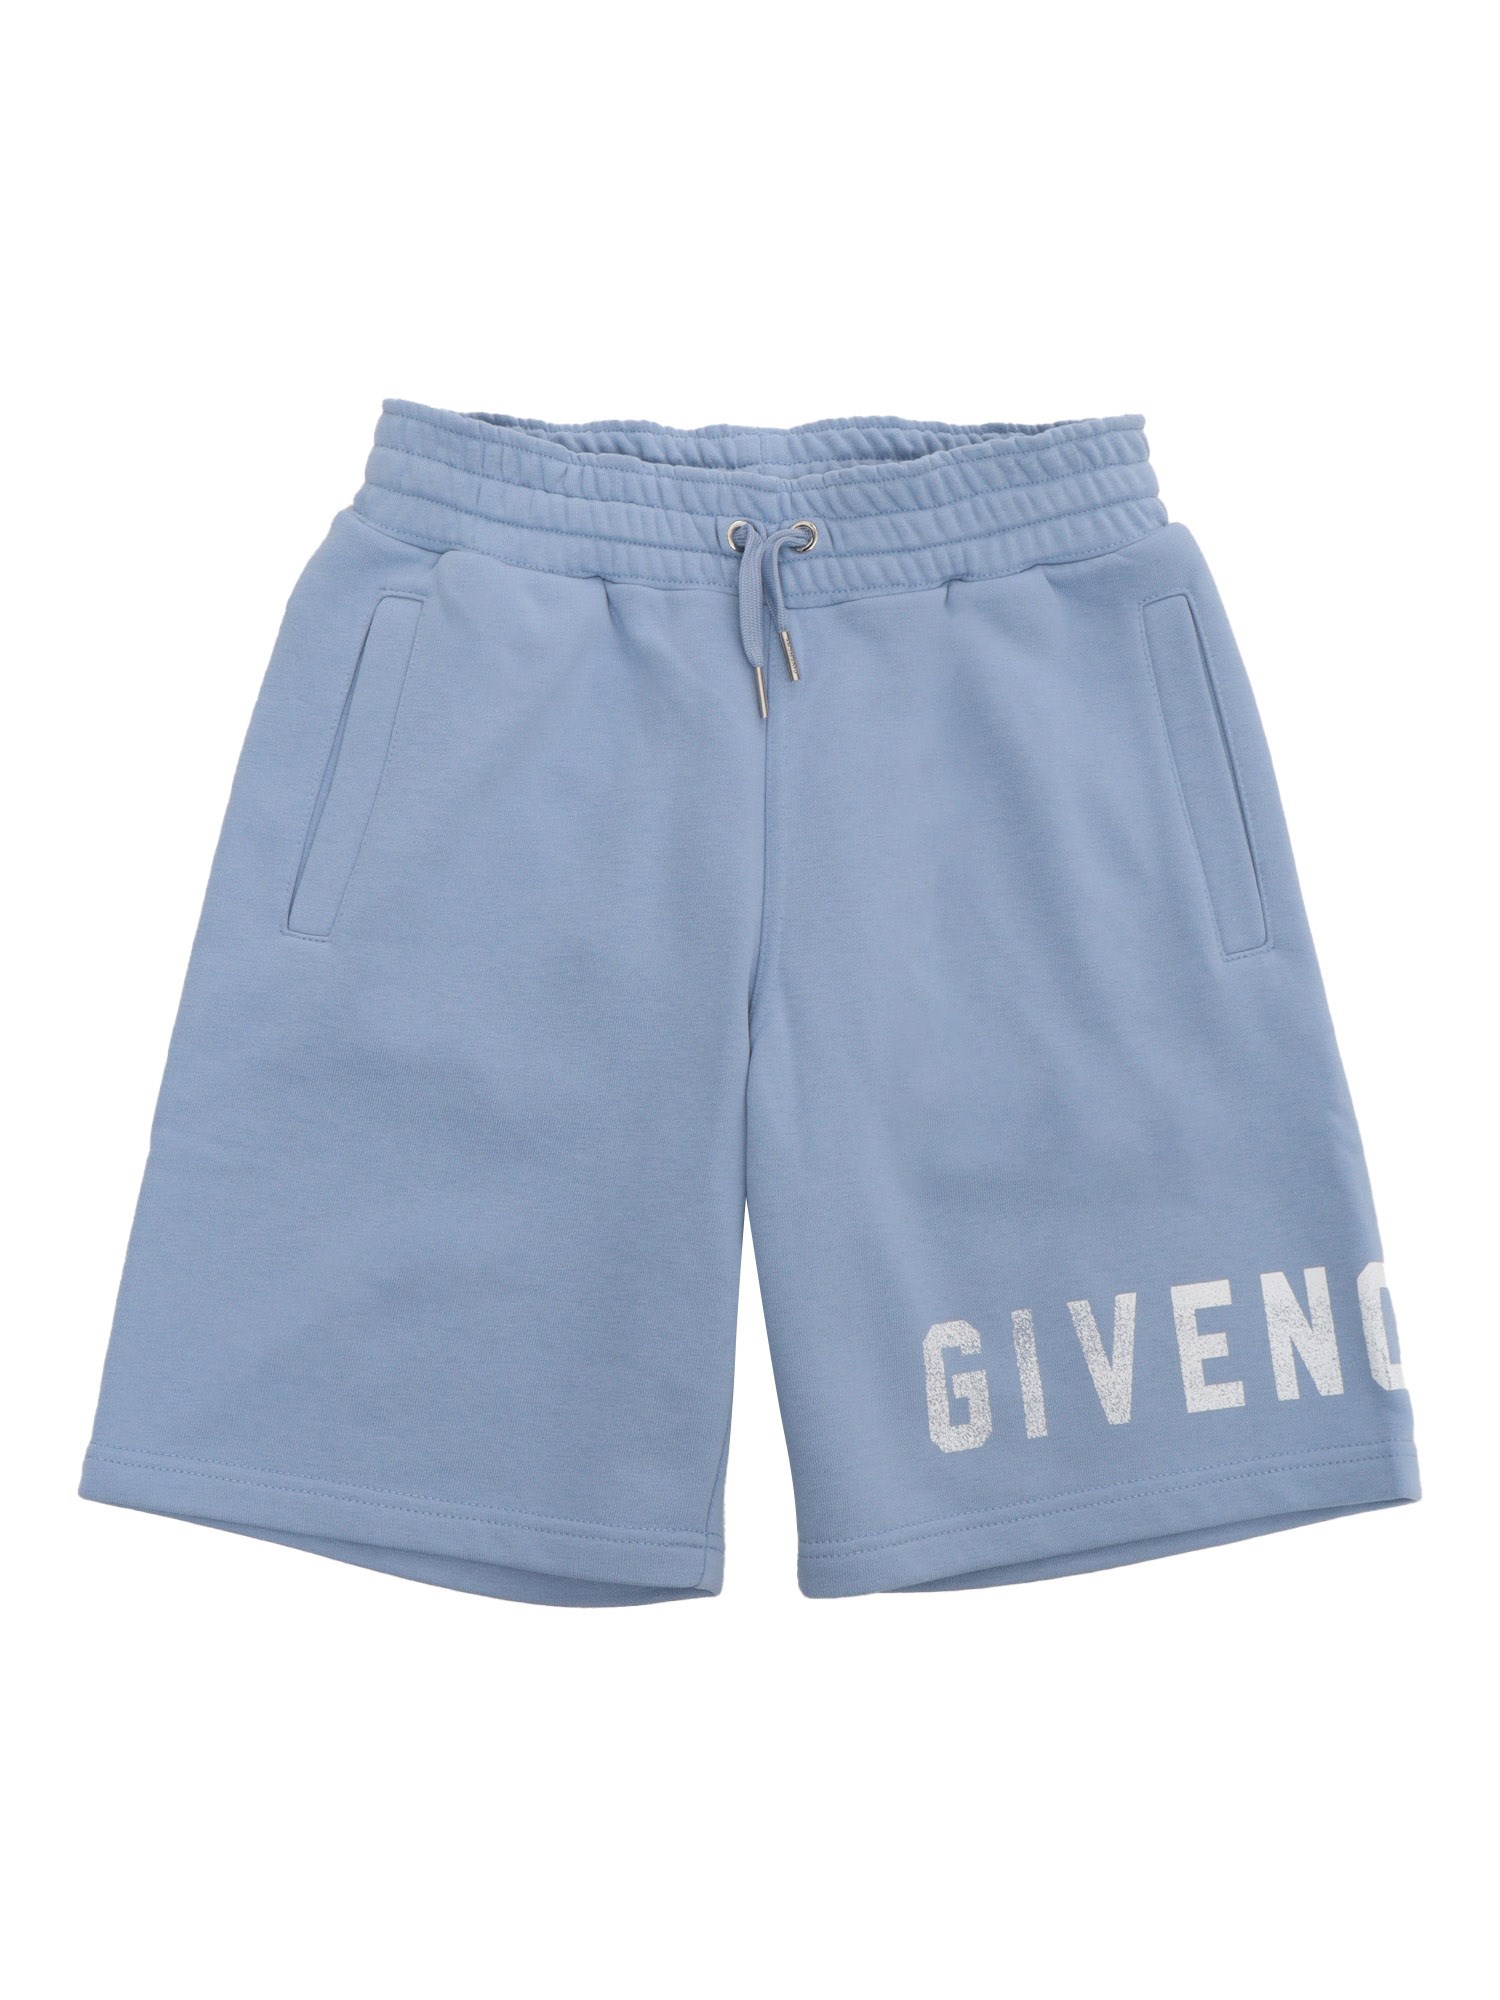 Givenchy Light Blue Shorts